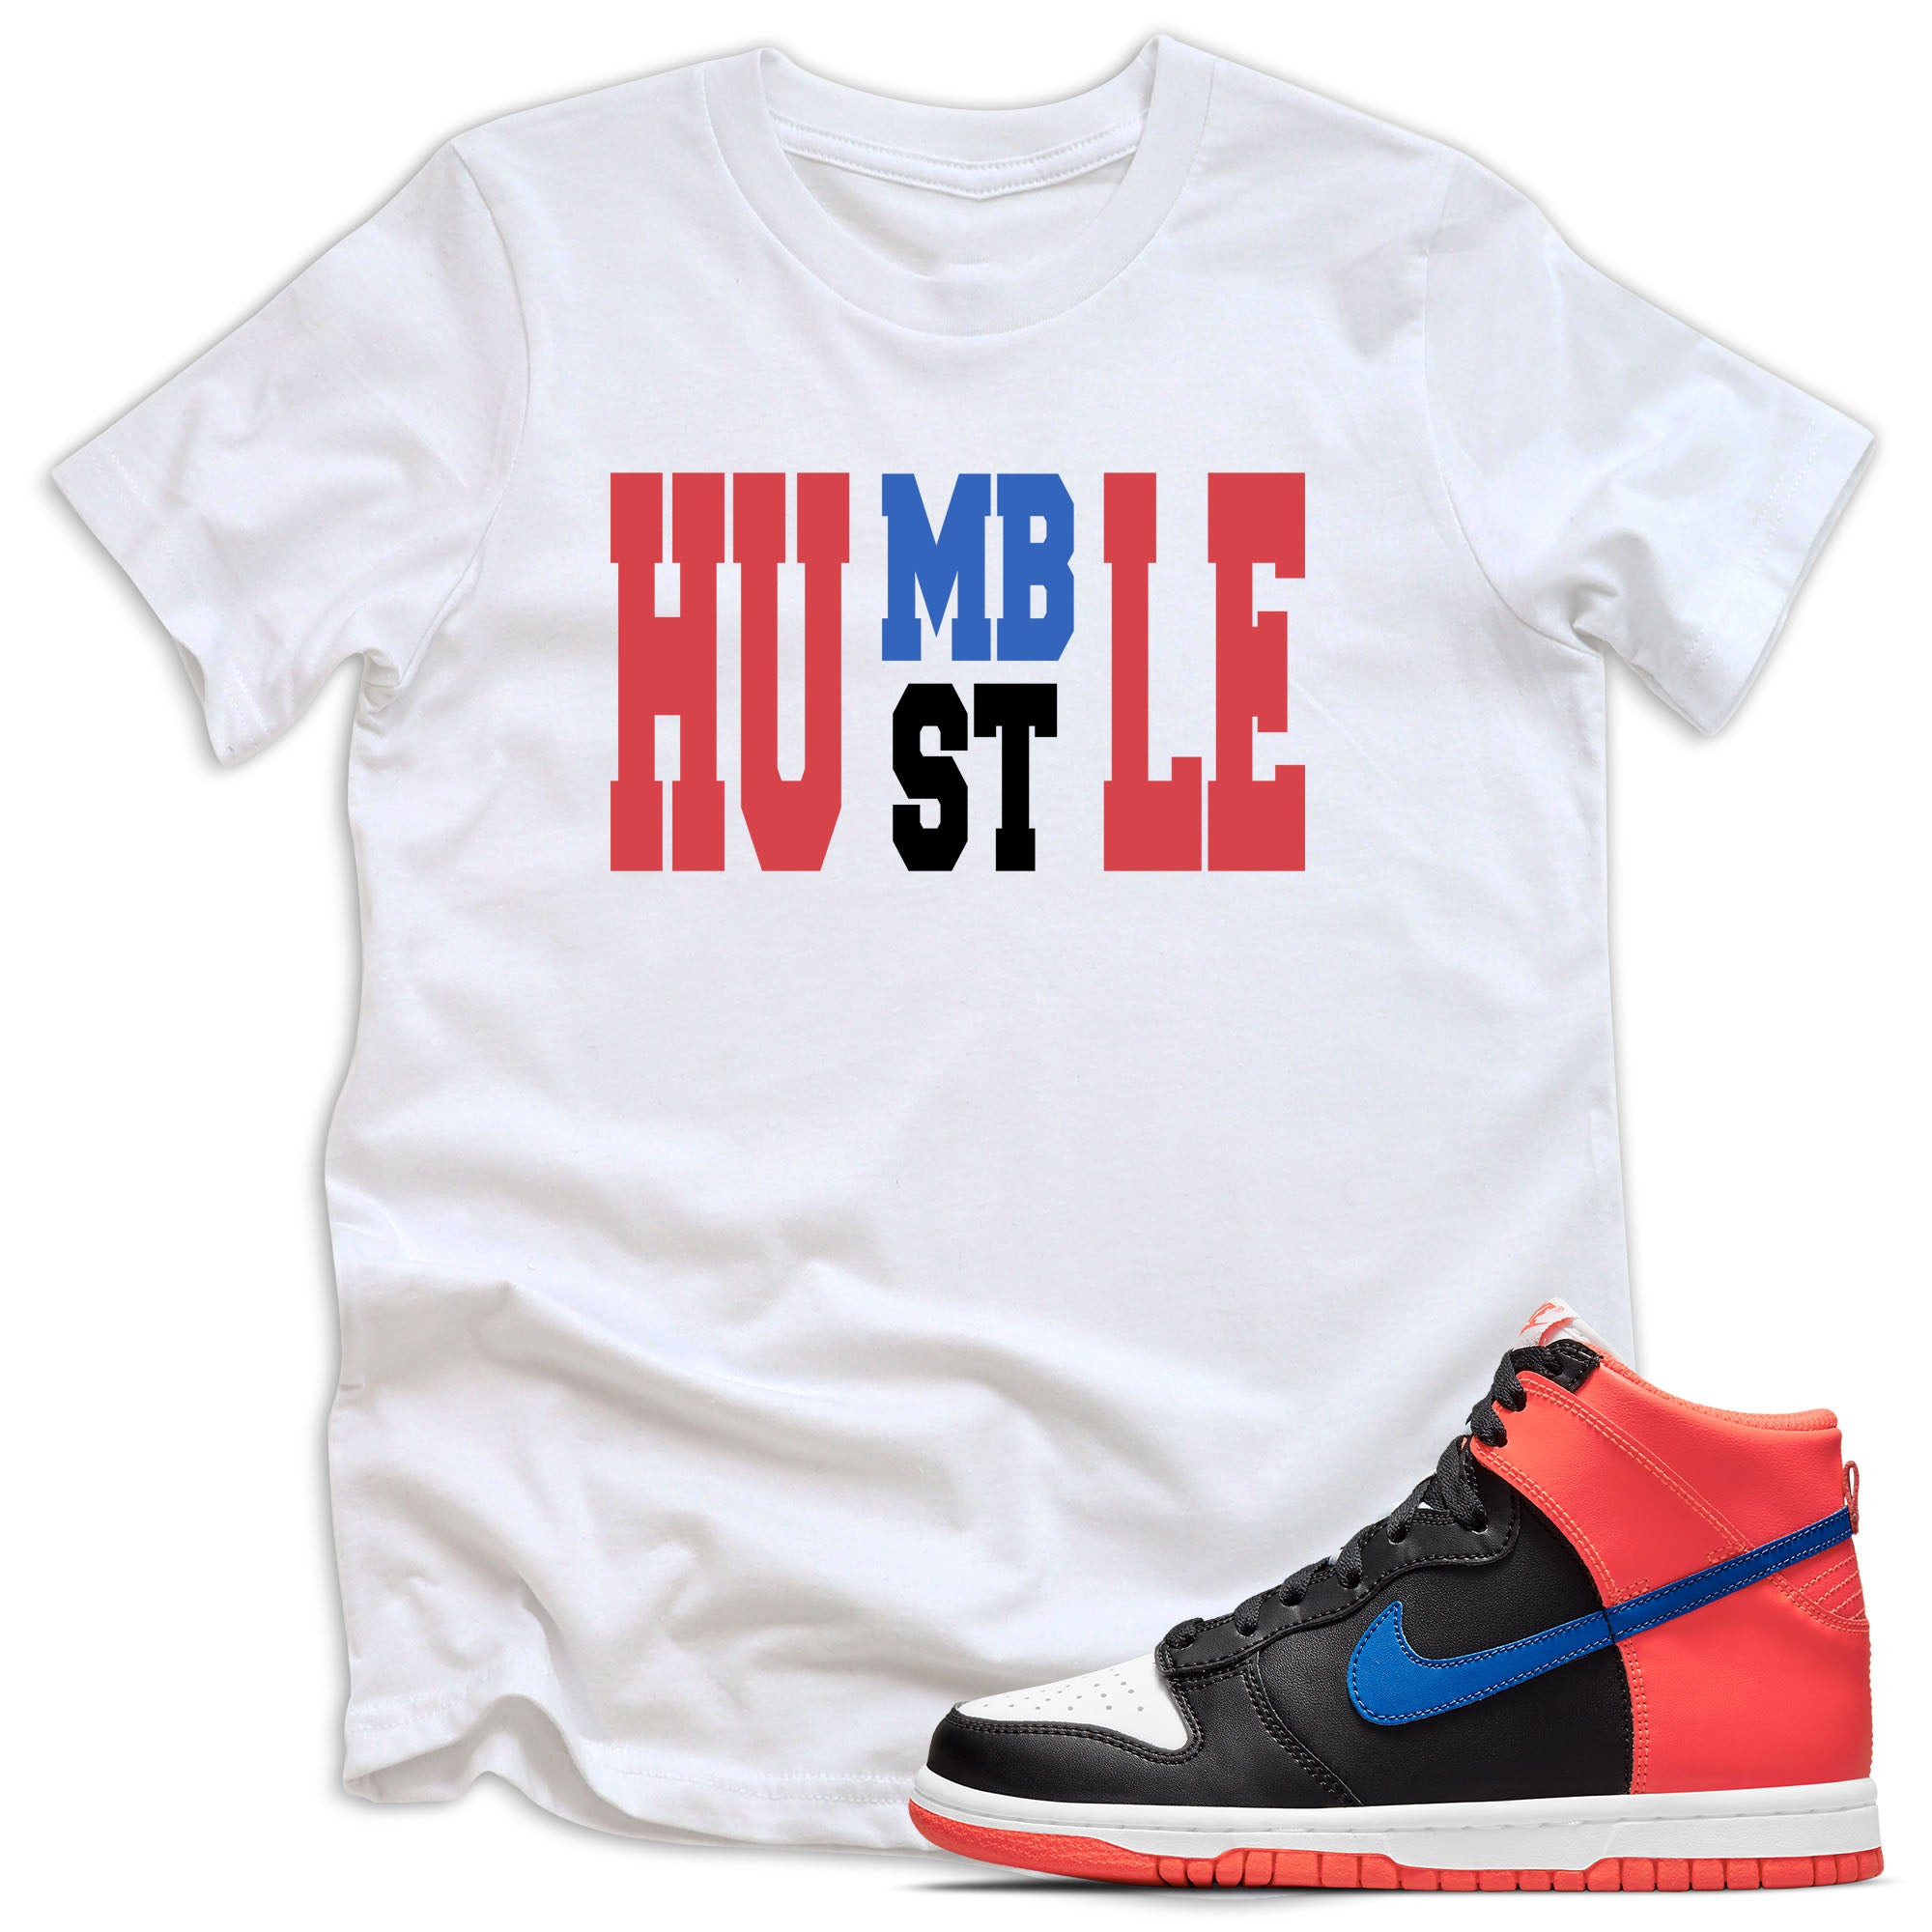 Humble Hustle Shirt Nike Dunk High Knicks photo